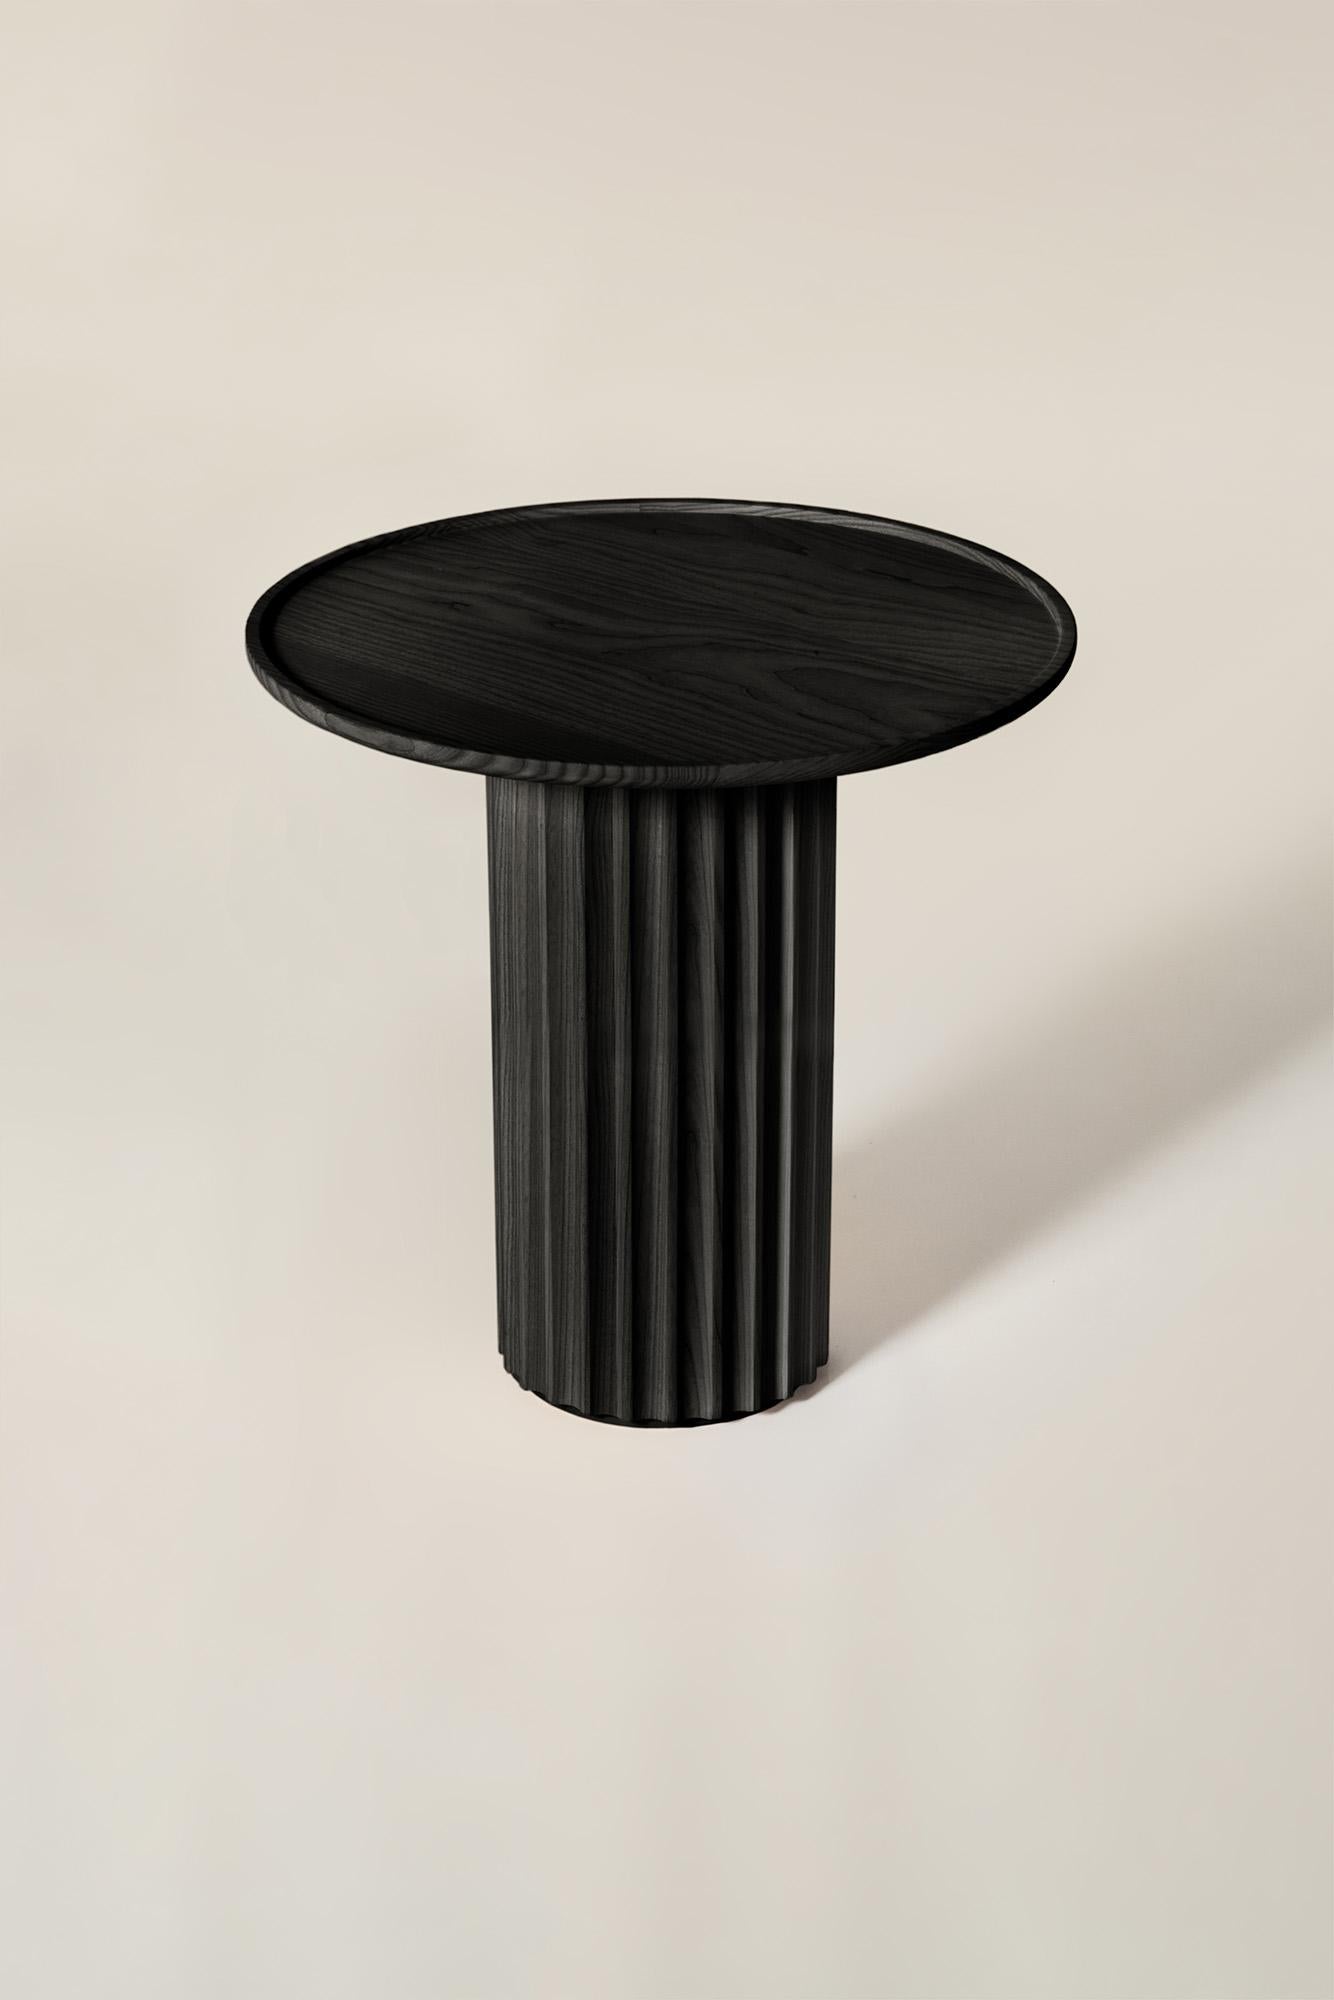 Capitello Solid Wood Coffee Table, Ash in Black Finish, Contemporary For Sale 2